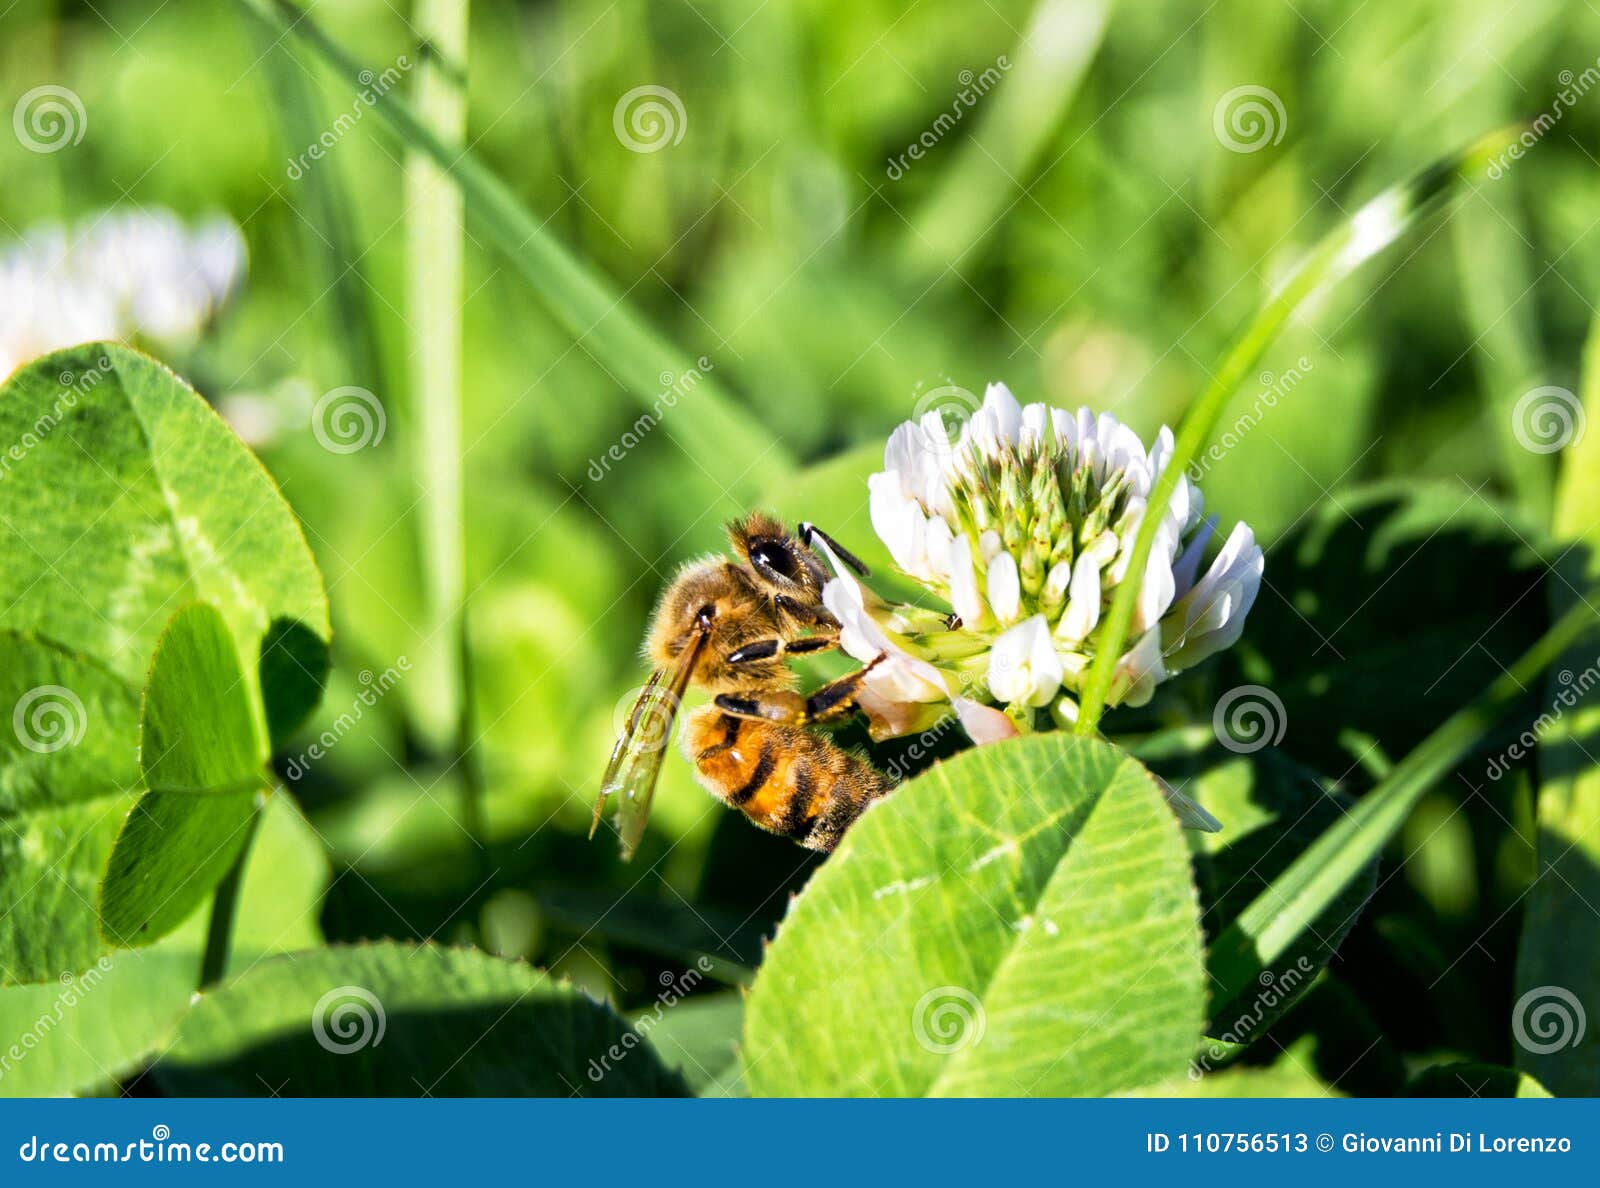 western honey bee on a flower - apis mellifera, apidae, hymenoptera, insecta